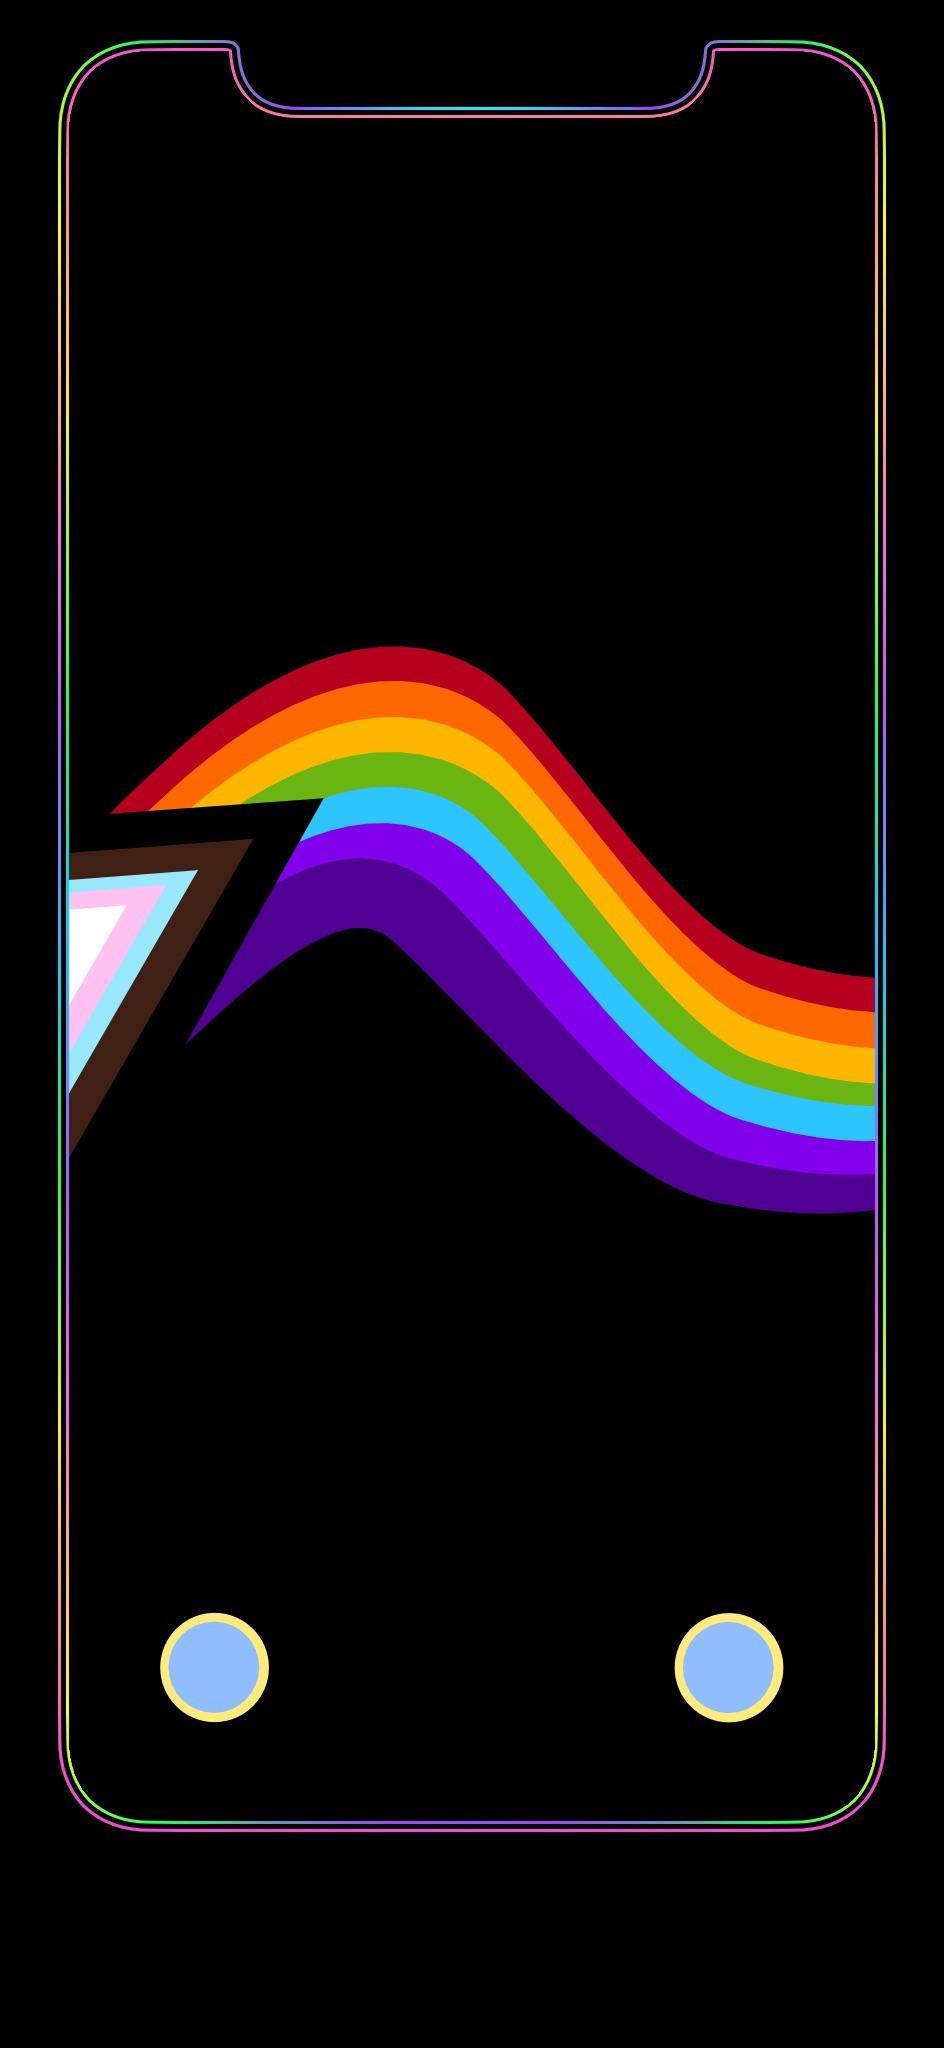 LGBTQ+ Pride Flag w/ border (link in comments). iPhone X Wallpaper X Wallpaper HD